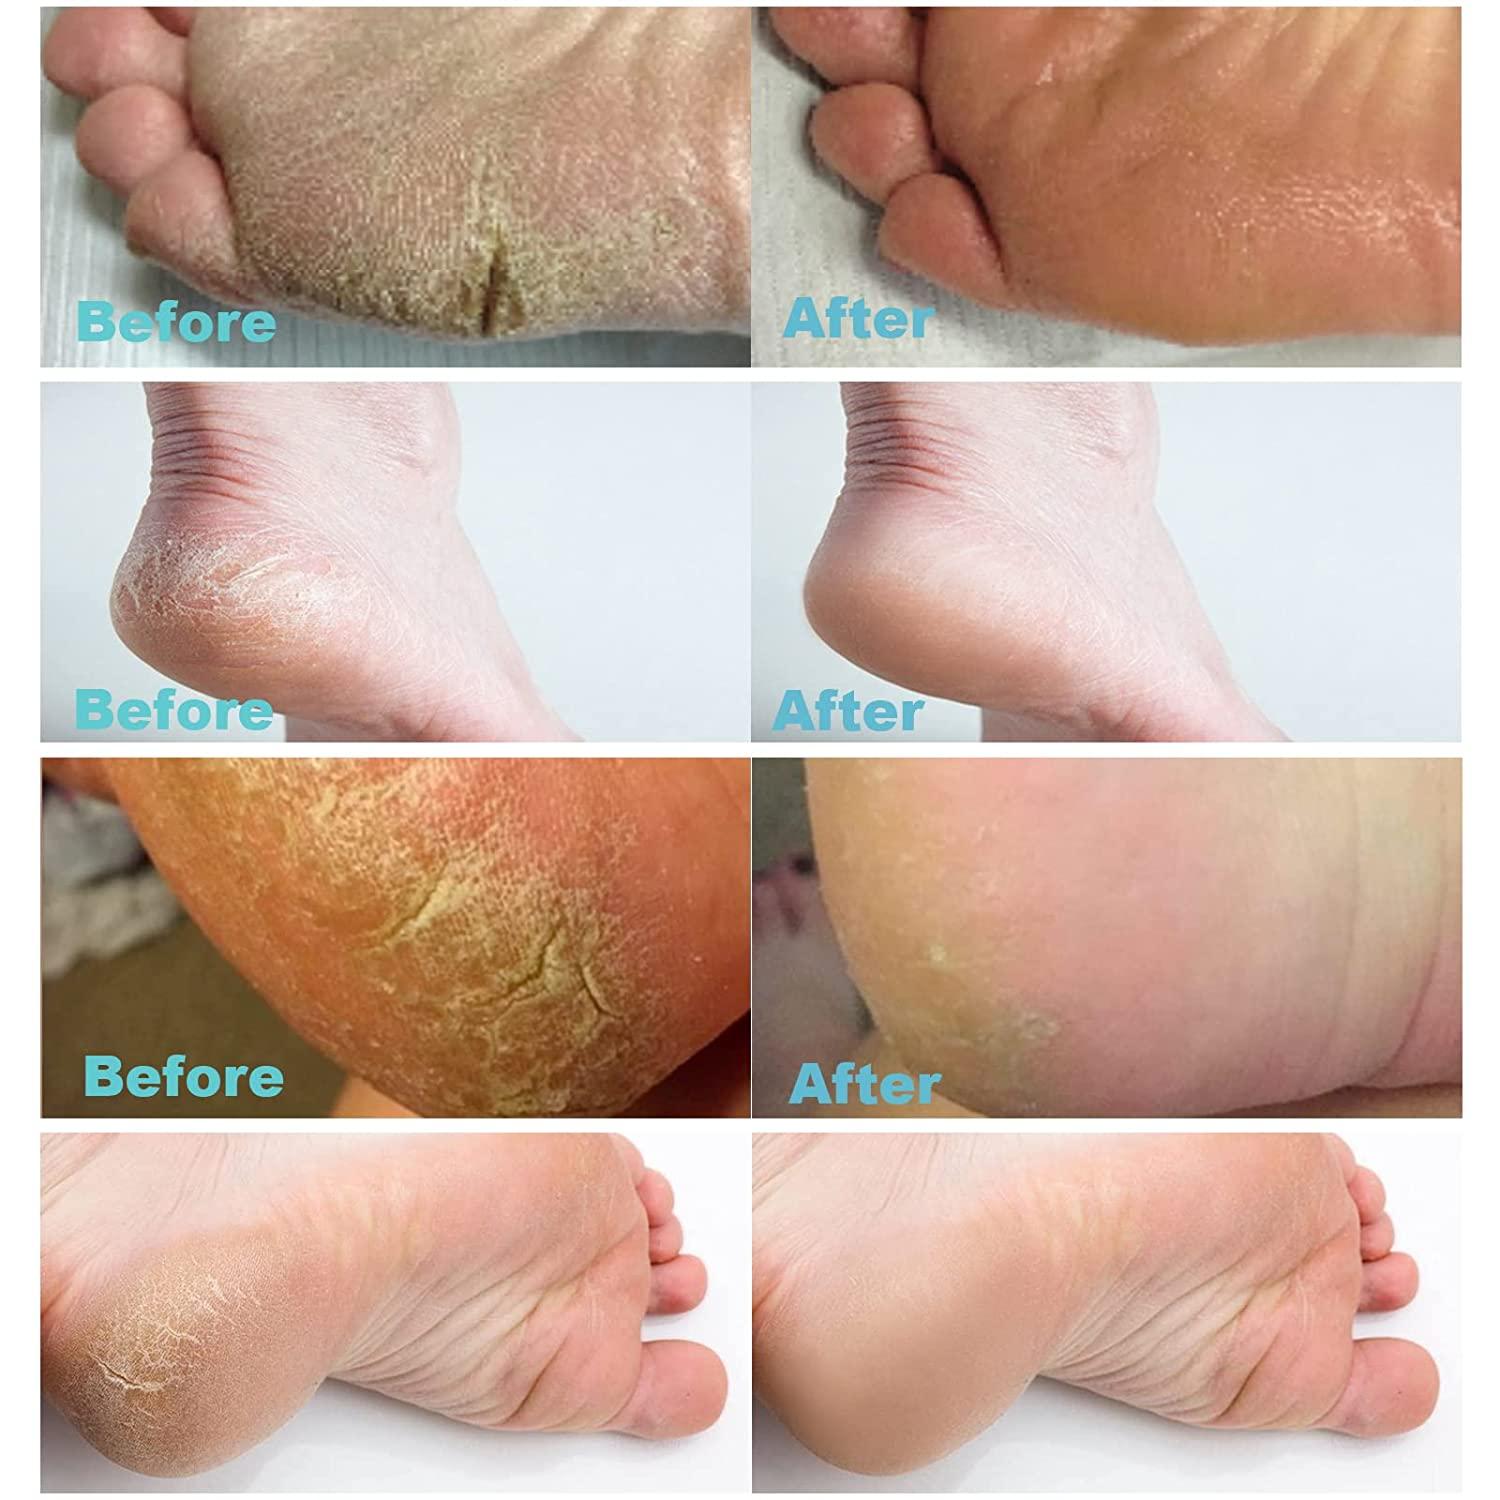 118ml) - Urea Cream 42% Plus Salicylic Acid 118ml, Upgraded Callus Remover  Hand Cream Foot Cream for Dry Cracked Feet, Hands, Heels, Elbows, Knees,  Intensive Moisturises & Softens Skin, Exfoliates... : Amazon.ae